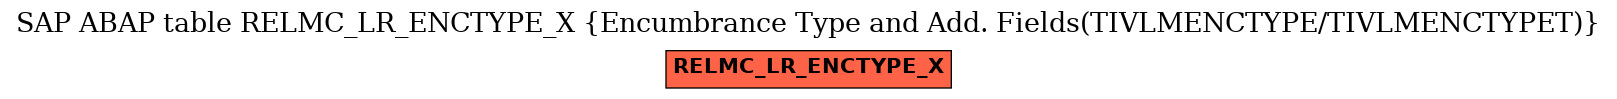 E-R Diagram for table RELMC_LR_ENCTYPE_X (Encumbrance Type and Add. Fields(TIVLMENCTYPE/TIVLMENCTYPET))